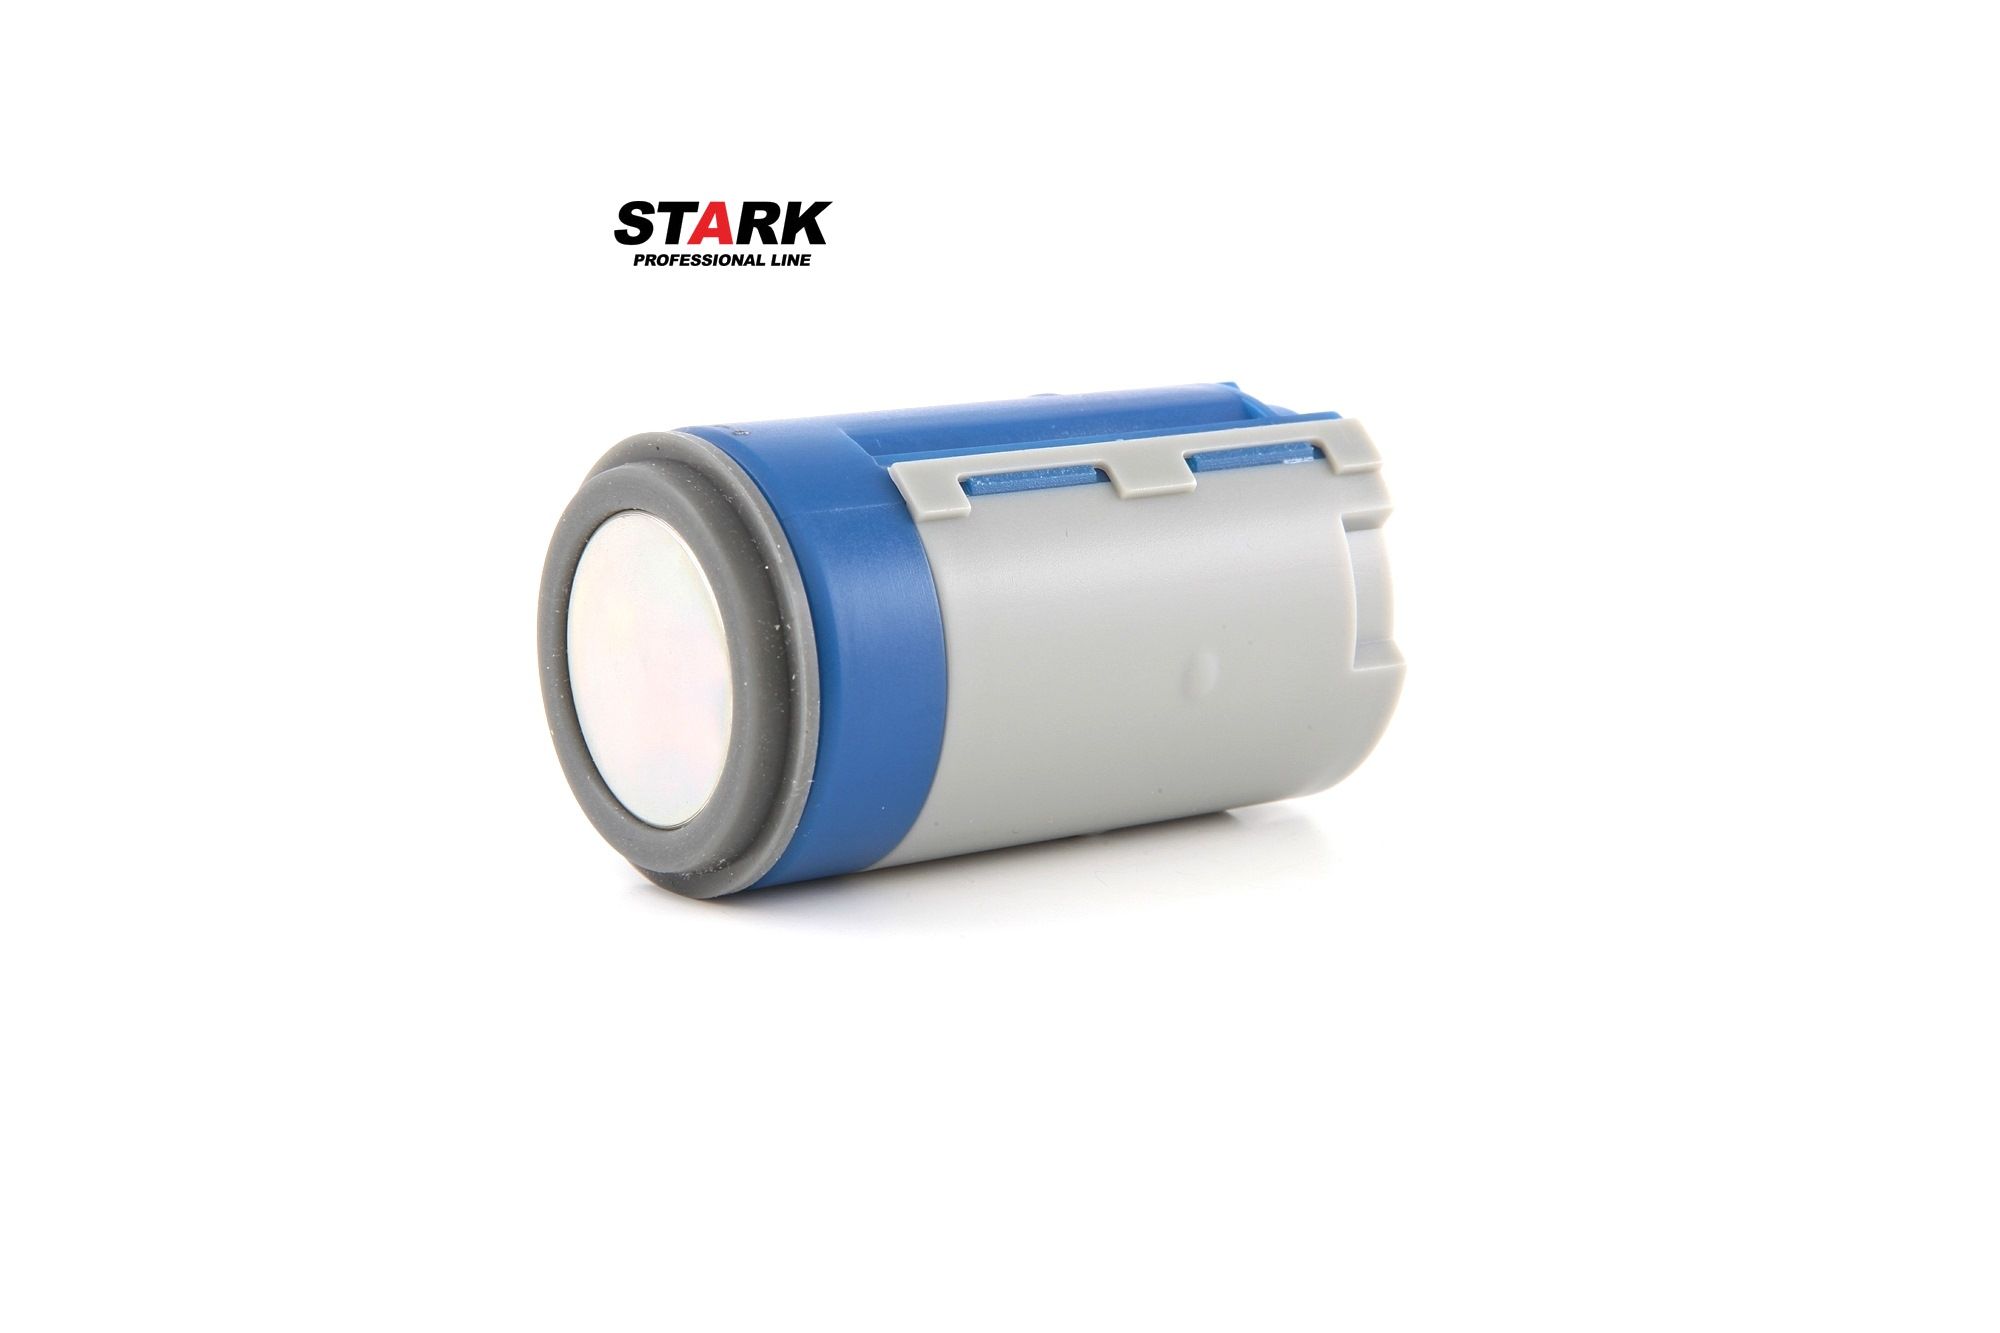 SKPDS-1420001 STARK hinten, vorne, silber, Ultraschallsensor Sensor, Einparkhilfe SKPDS-1420001 günstig kaufen